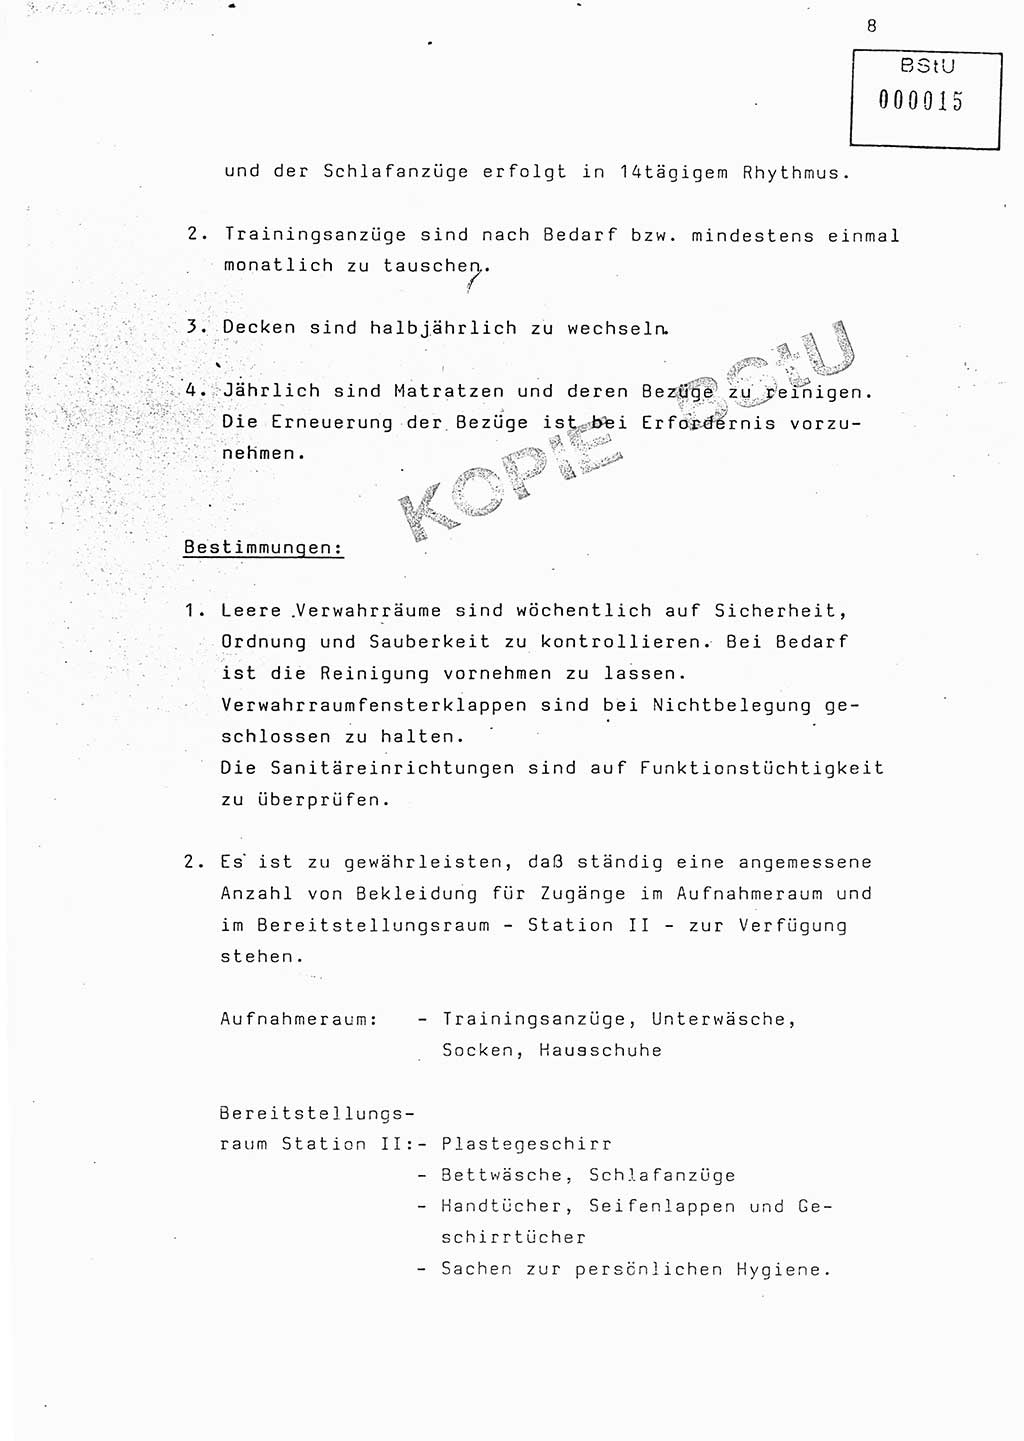 Fachschulabschlußarbeit Oberleutnant Bernd Mekelburg (Abt. ⅩⅣ/2), Oberleutnant Tilo Lilpopp (Abt. ⅩⅣ/2), Ministerium für Staatssicherheit (MfS) [Deutsche Demokratische Republik (DDR)], Abteilung ⅩⅣ, o.D., o.O, o.J., ca. 1986 wg. Bez. DA 1/86, Seite 8 (FS-Abschl.-Arb. MfS DDR Abt. ⅩⅣ 1986, S. 8)